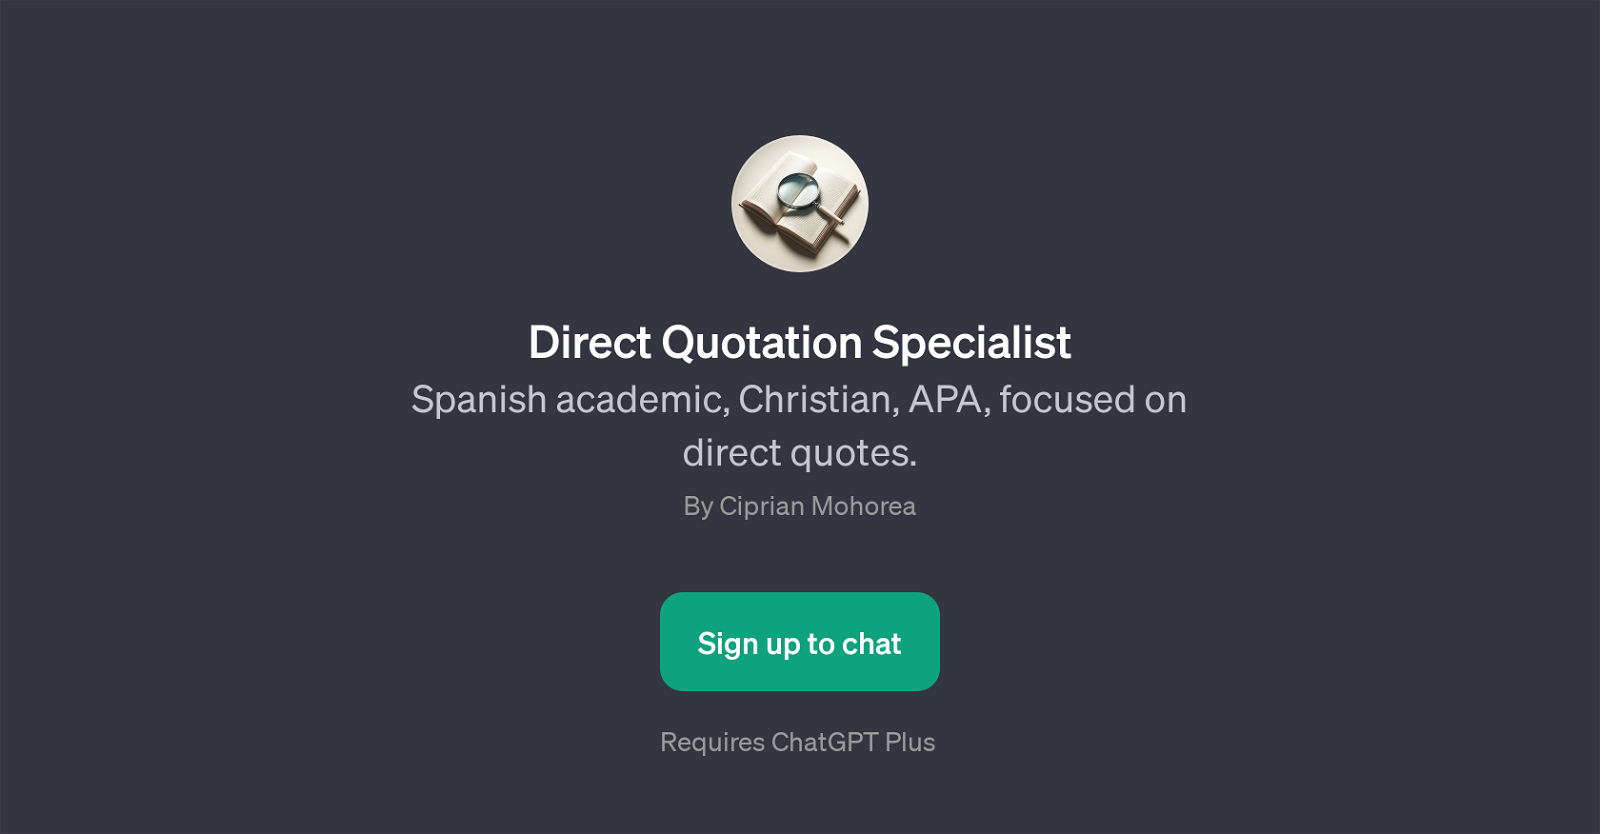 Direct Quotation Specialist website